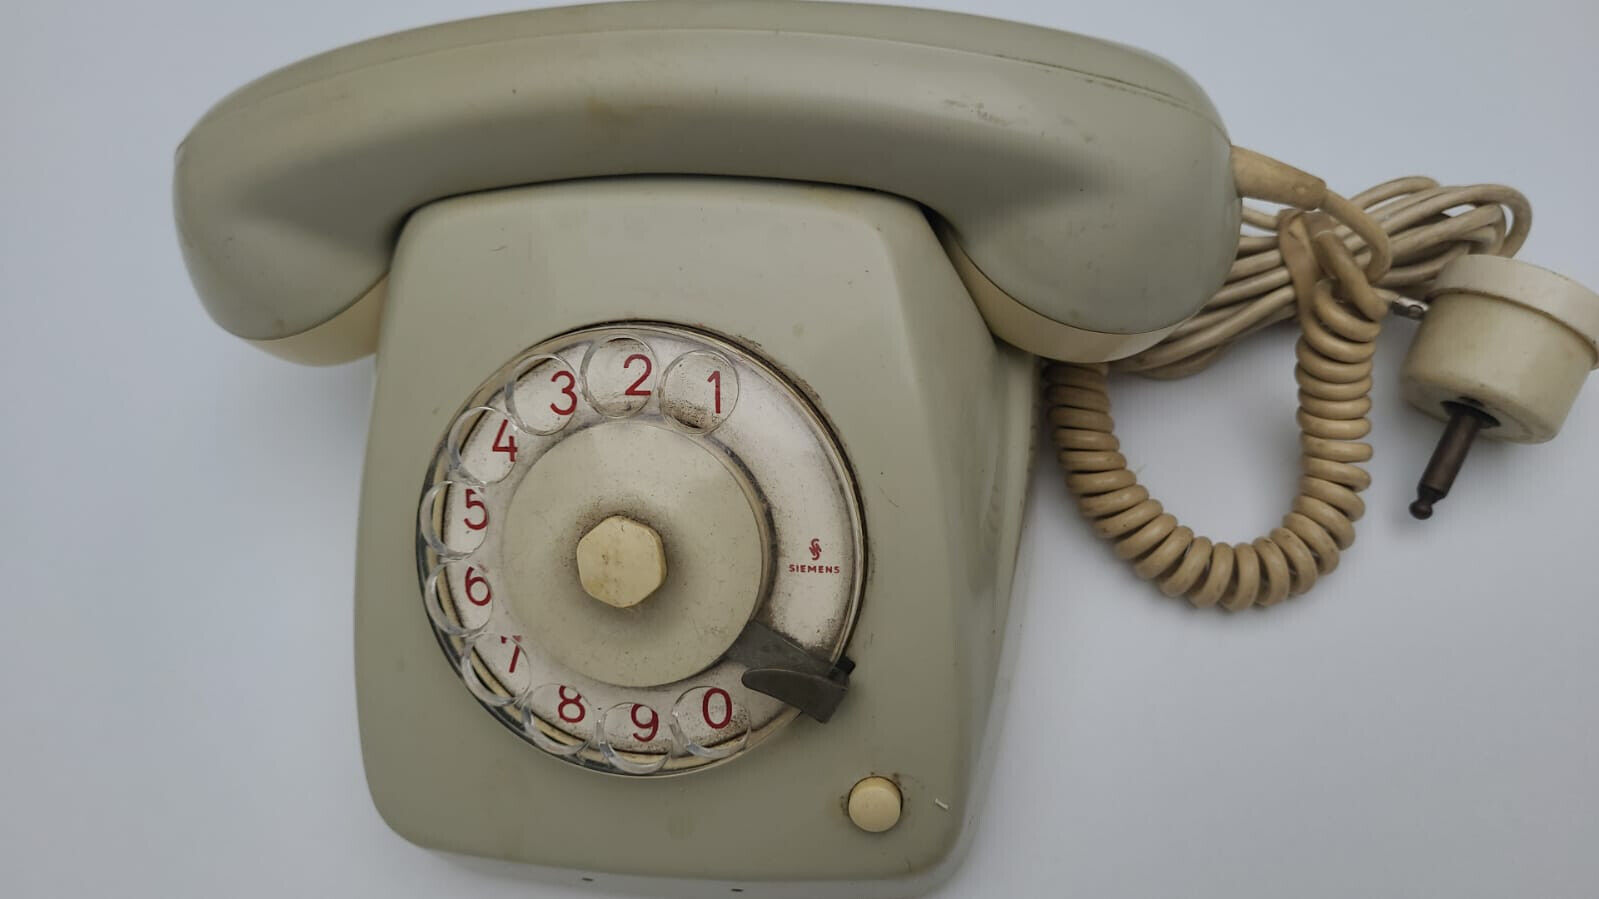 Vintage Siemens S30054 S5254 Rotary Telephone - 1980s - Retro Dial Phone perfect